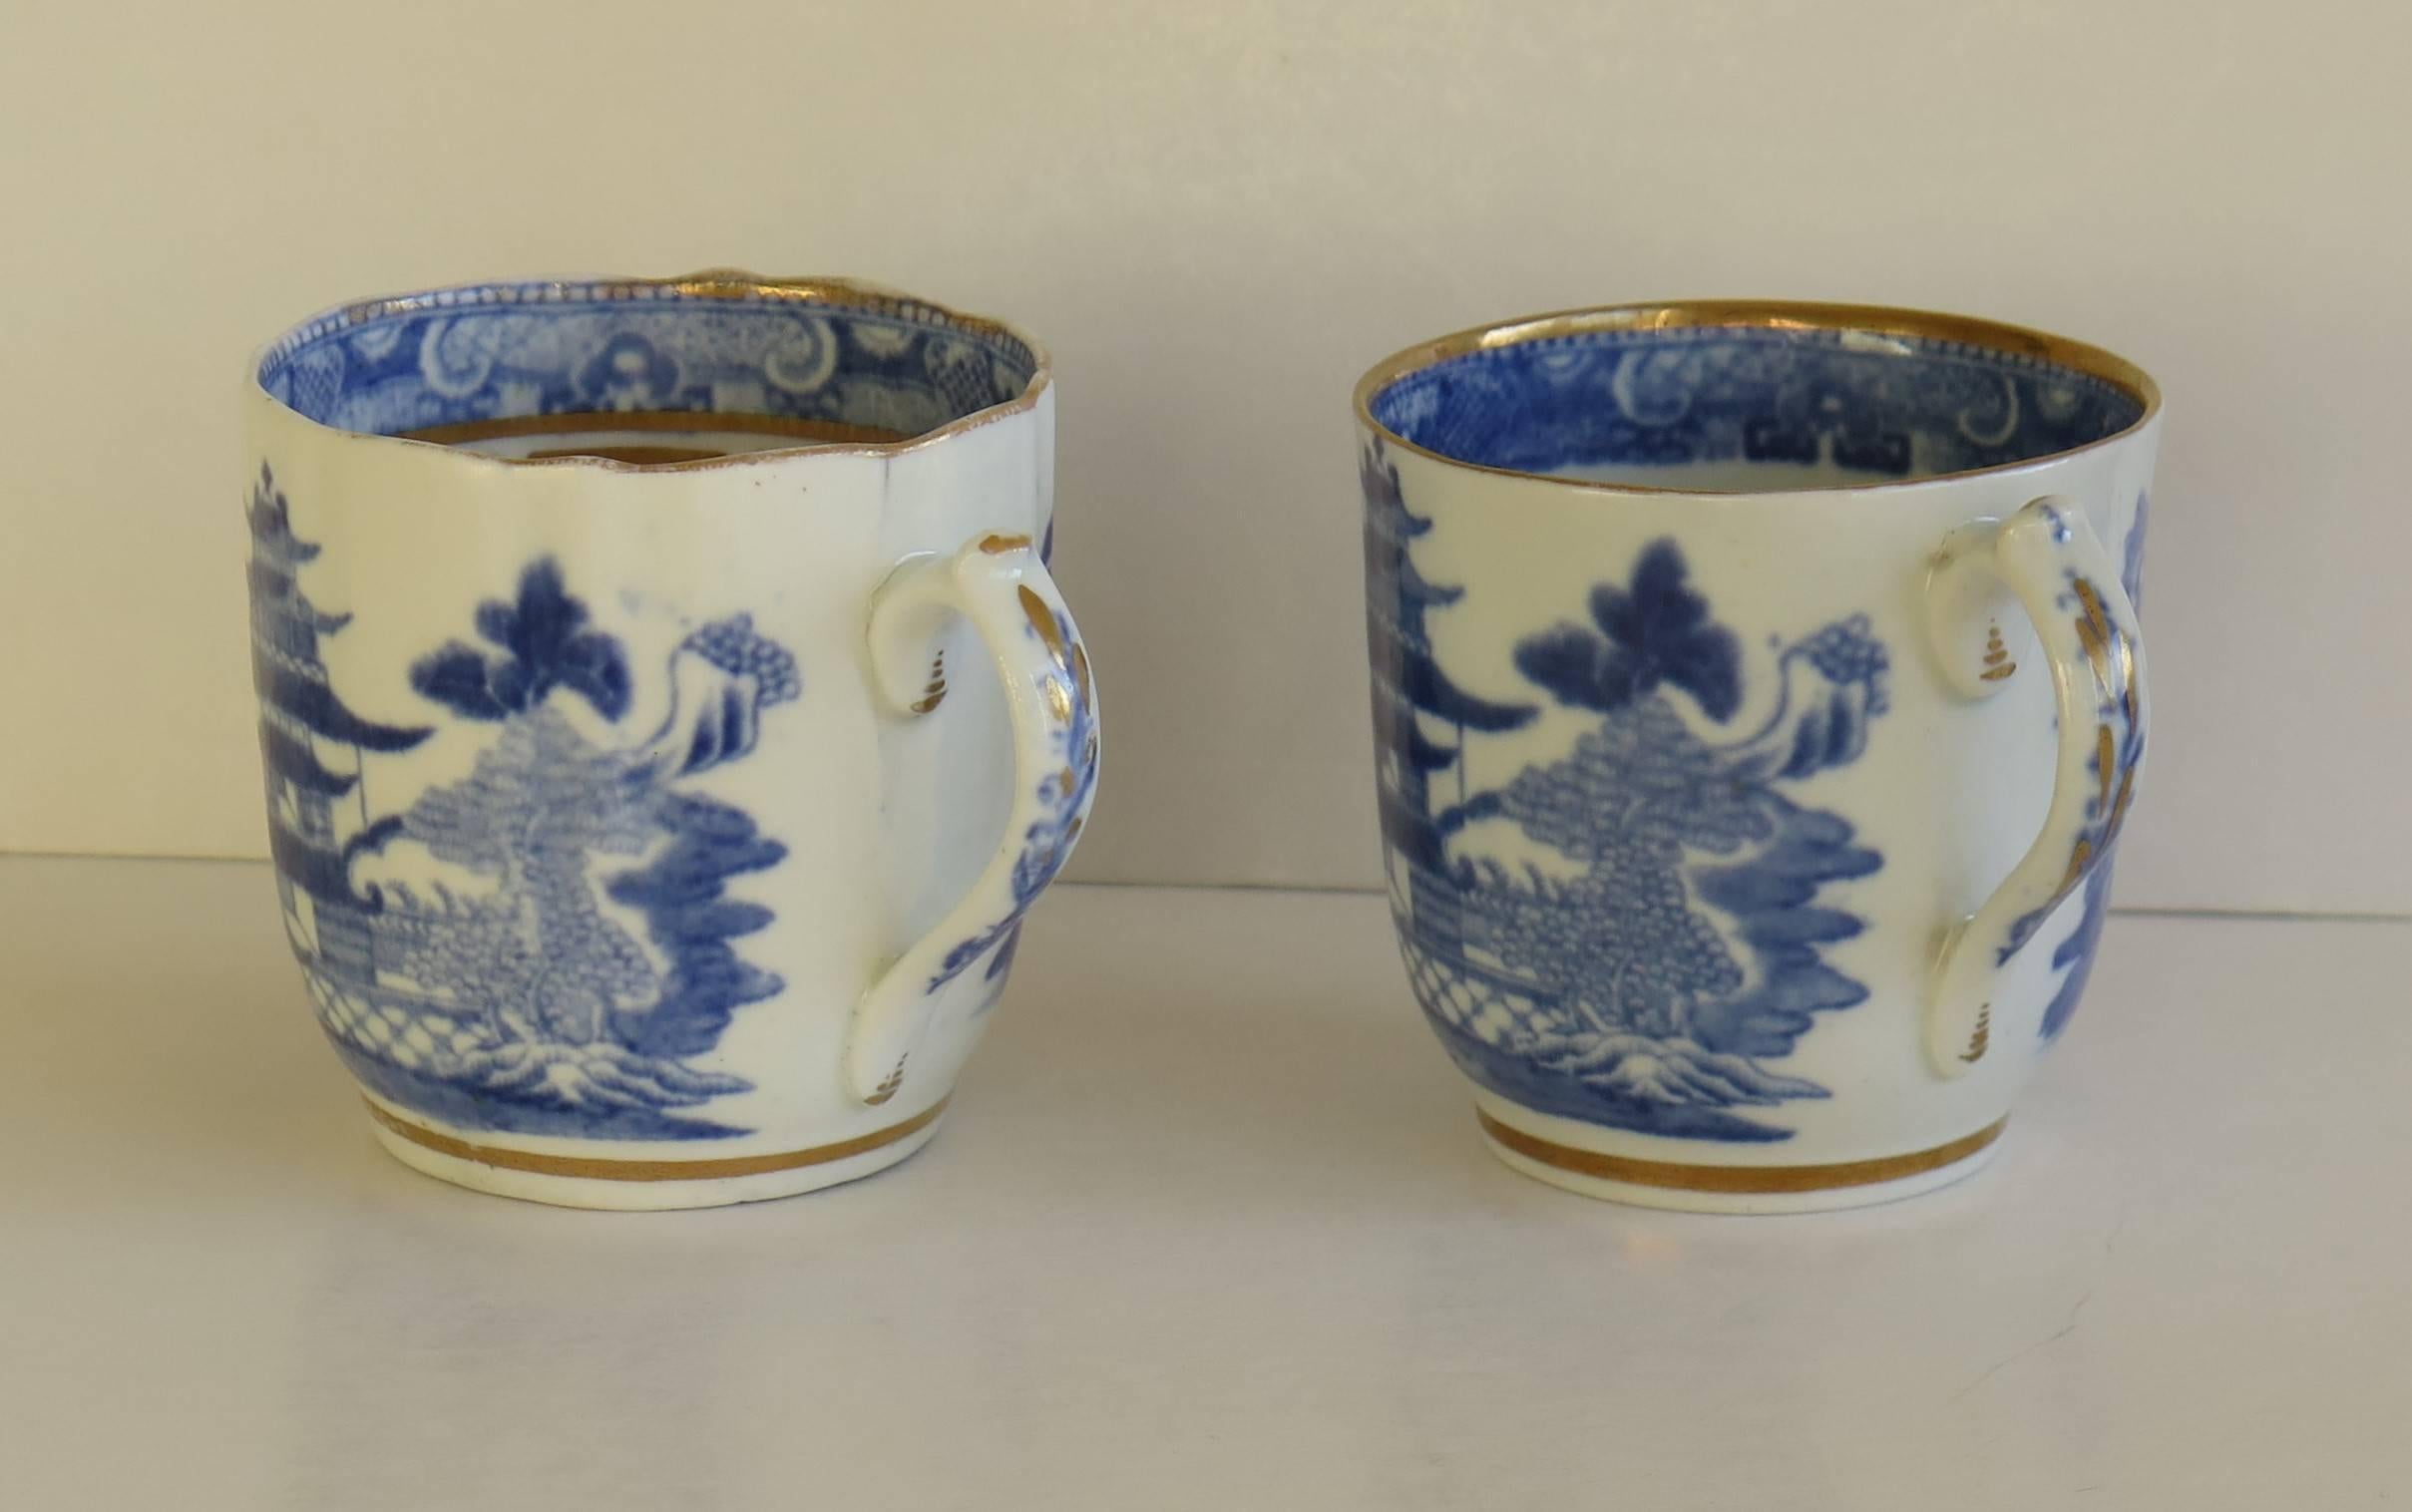 19th Century Similar PAIR of Miles Mason's Coffee Cans, Porcelain, Pagoda Pattern, circa 1800